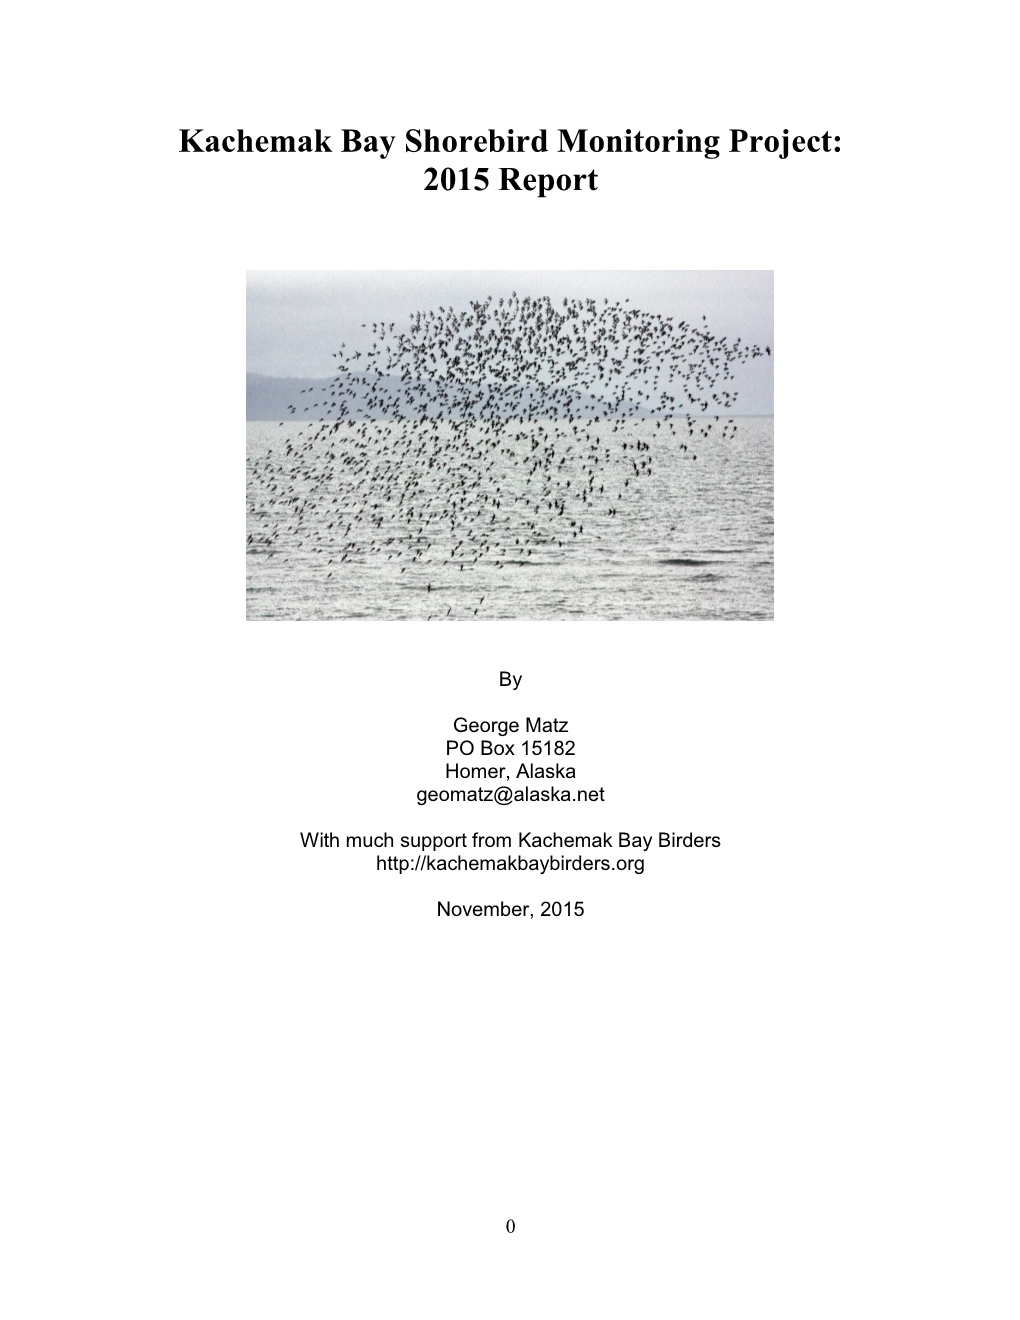 Kachemak Bay Shorebird Monitoring Project: 2015 Report